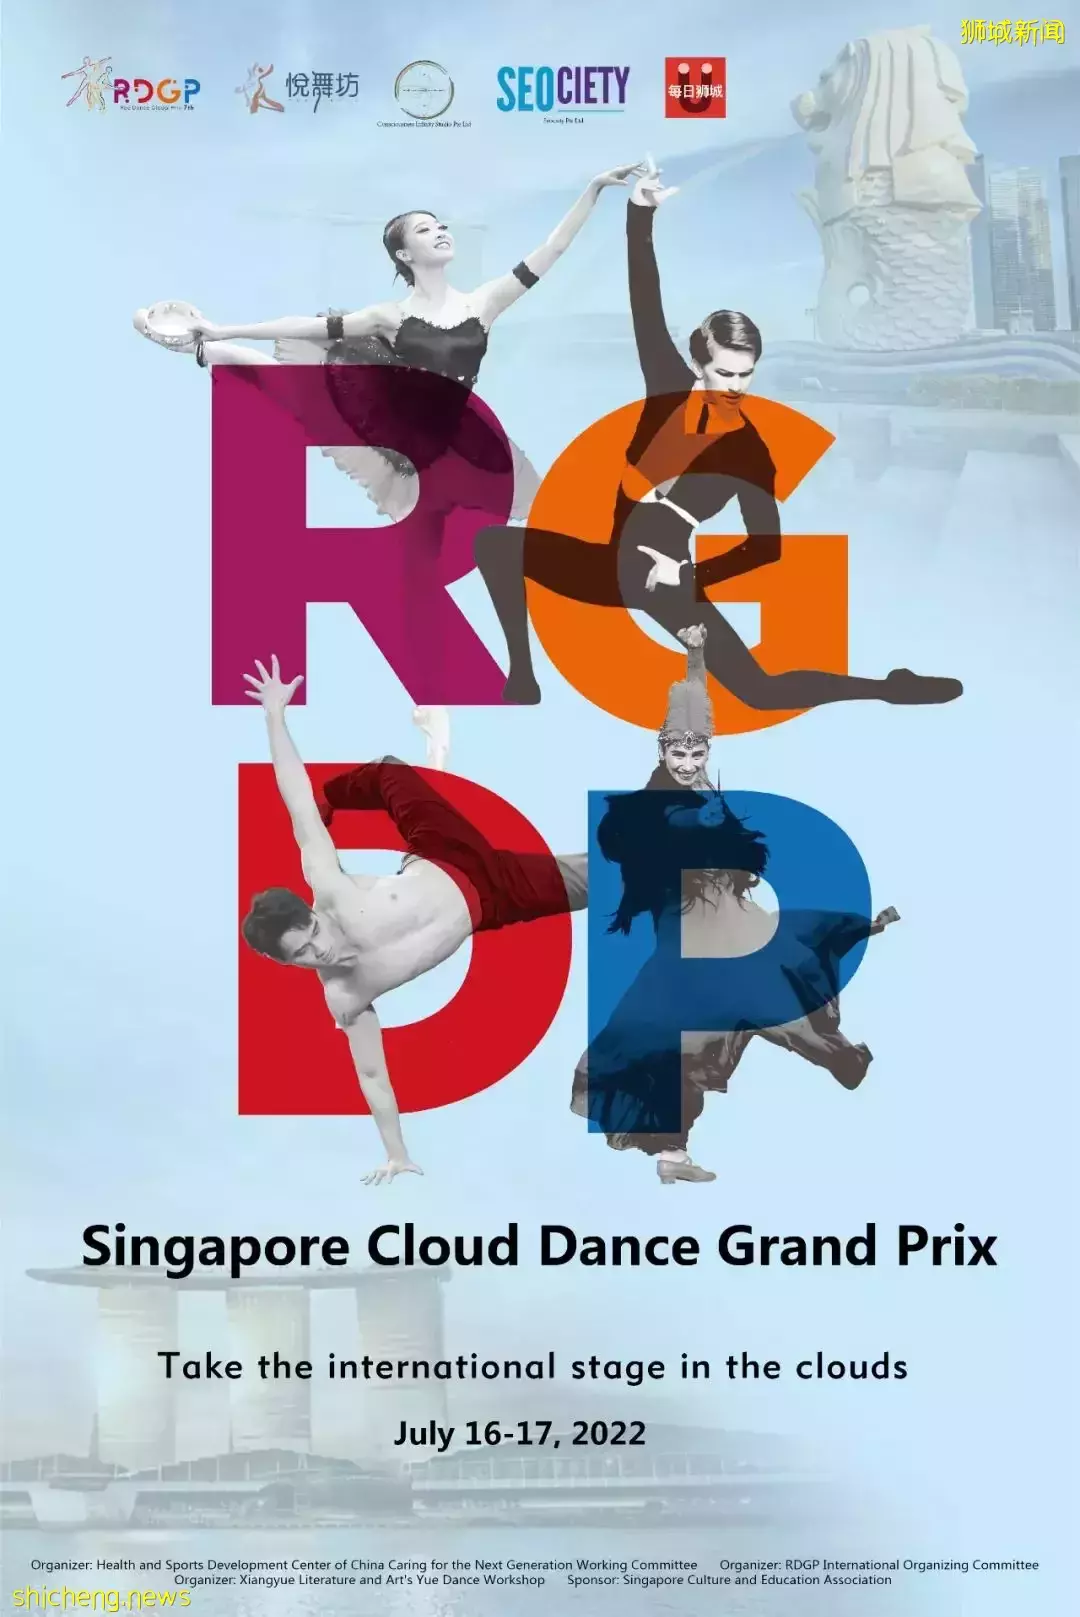 2022RDGP 舞動新加坡！雲端舞蹈大賽火熱報名中